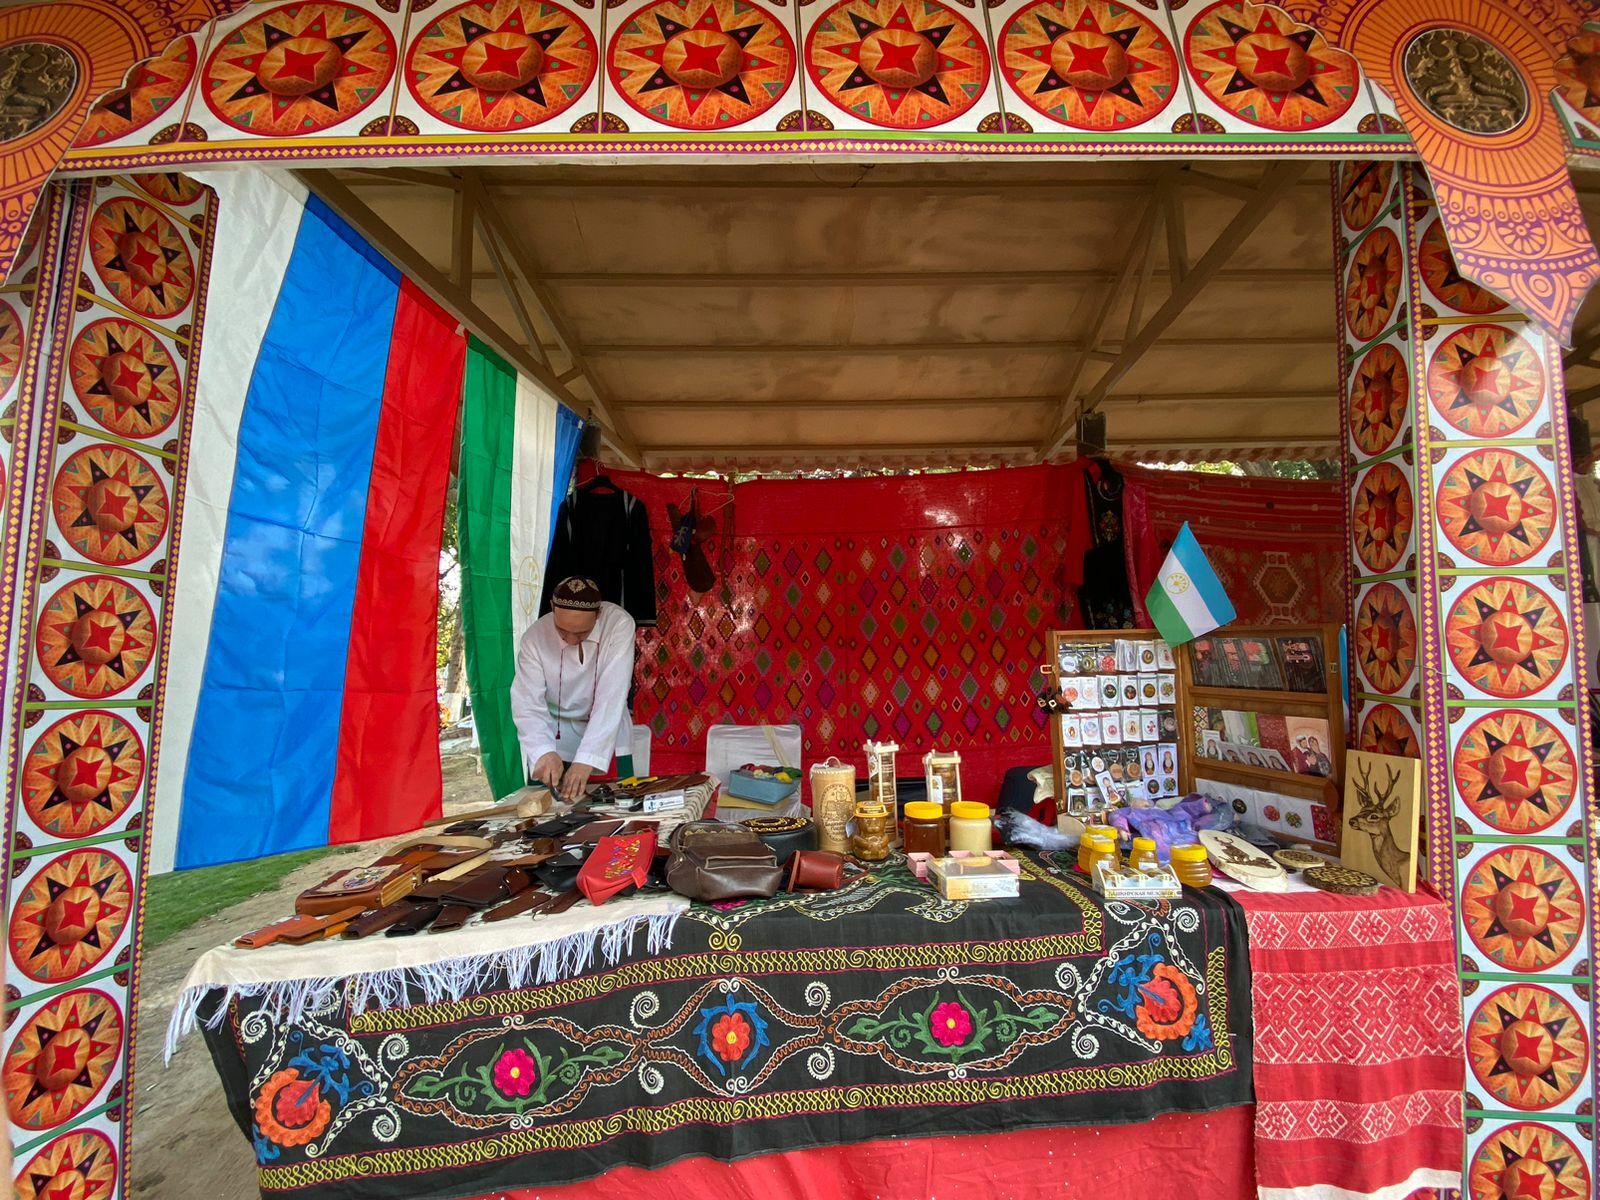 Амина Шафикова возглавила делегацию Башкортостана на Международном фестивале «Сураджкунд Мела» в Индии